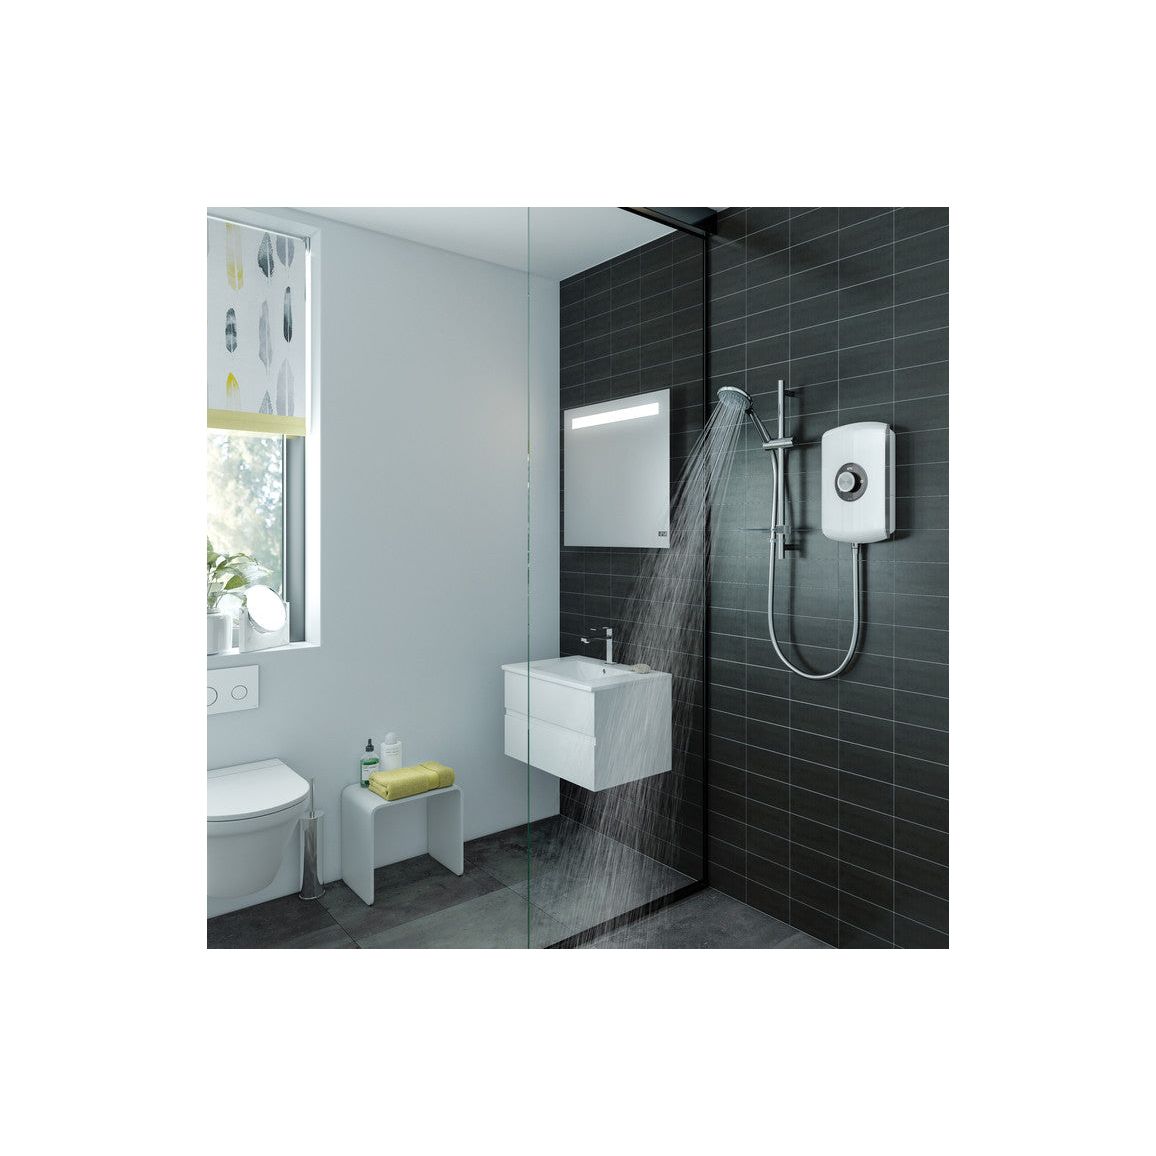 Triton Amore 8.5kW Electric Shower - Black Gloss